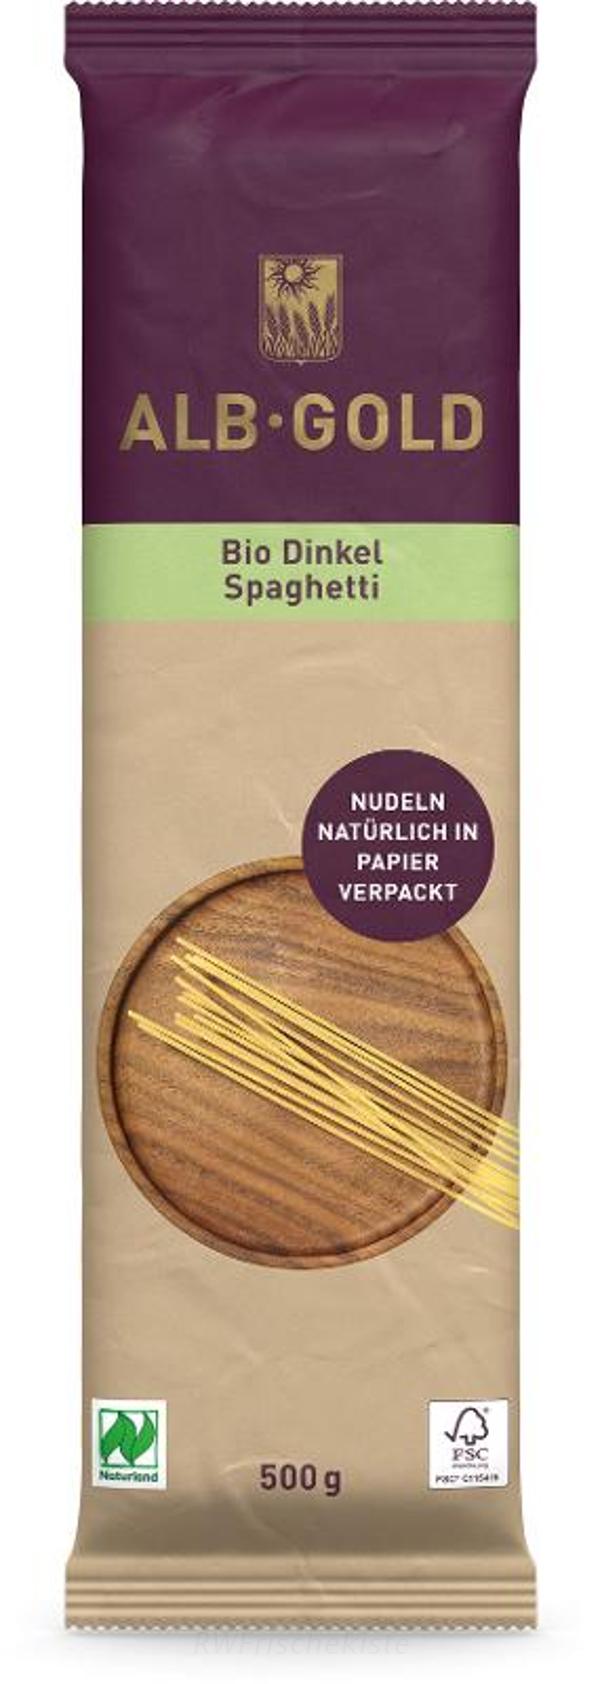 Produktfoto zu Spaghetti Dinkel Albgold